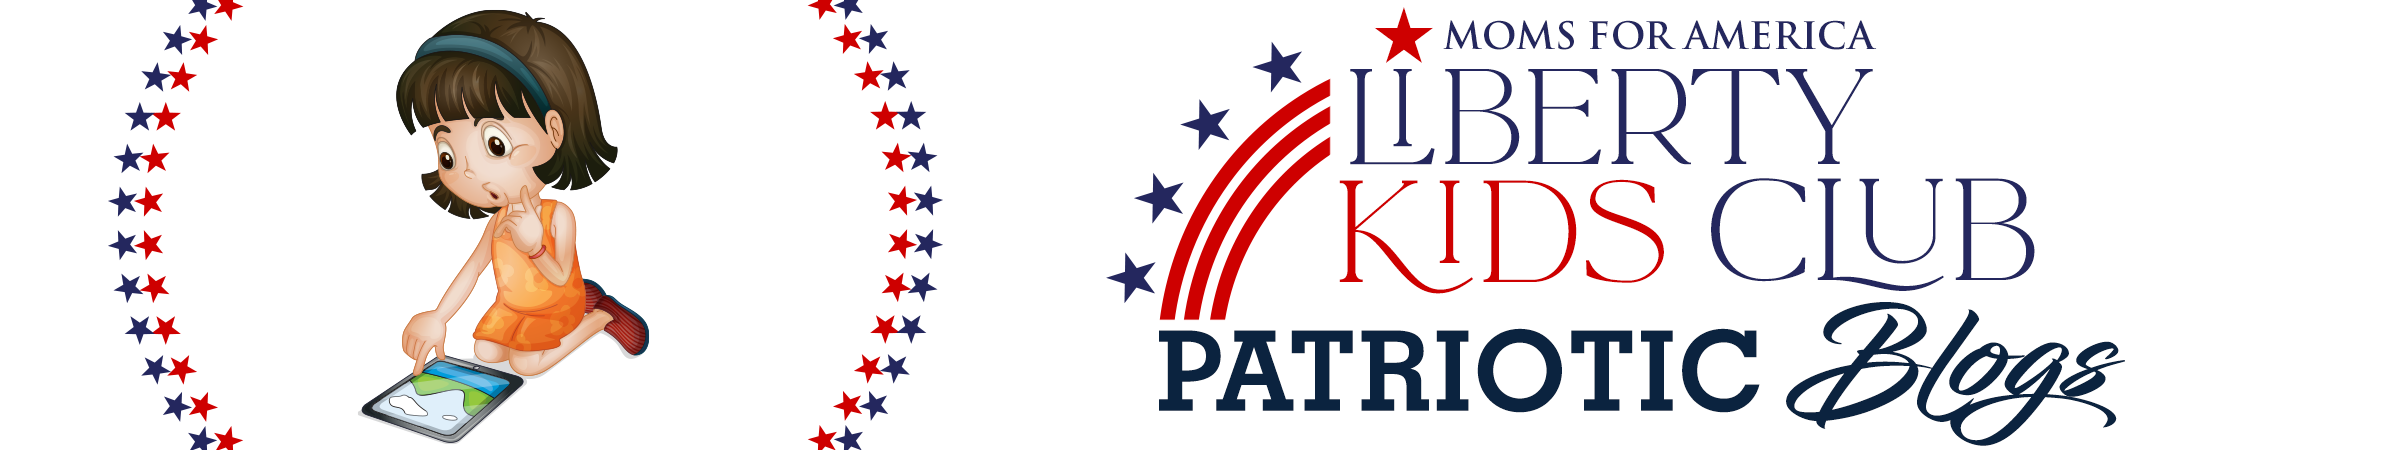 Patriotic Blogs - Liberty Kids Club - Moms for America